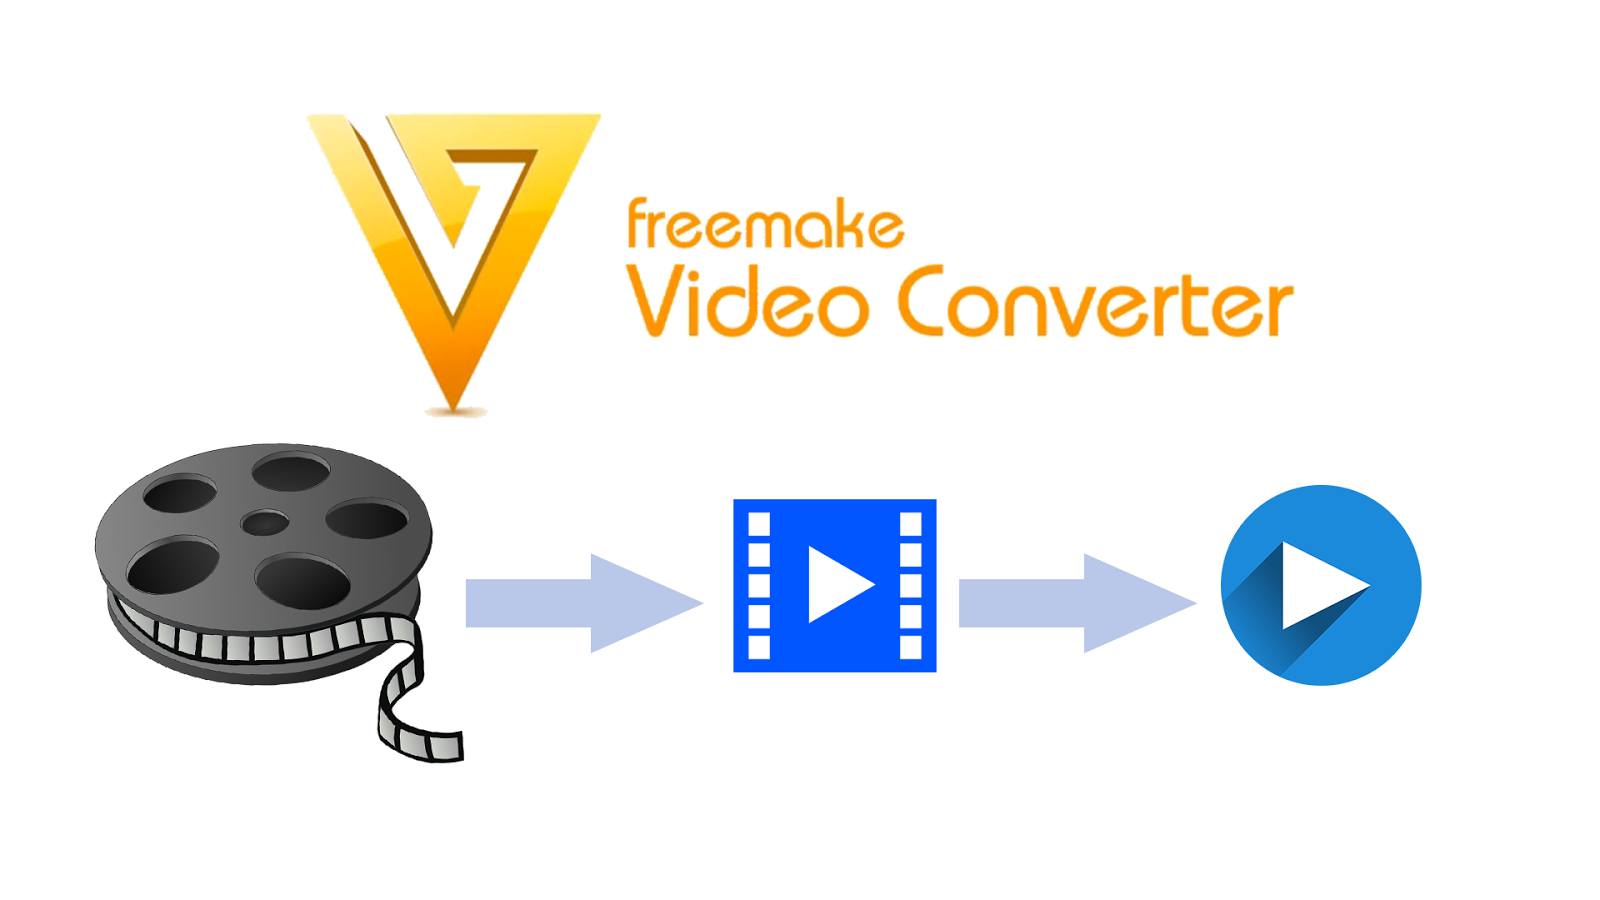 Видео конвертер мастер. Freemake Video Converter. Freemake Video Converter - логотип. Видео преобразователь. Видео конвертер фавикон.